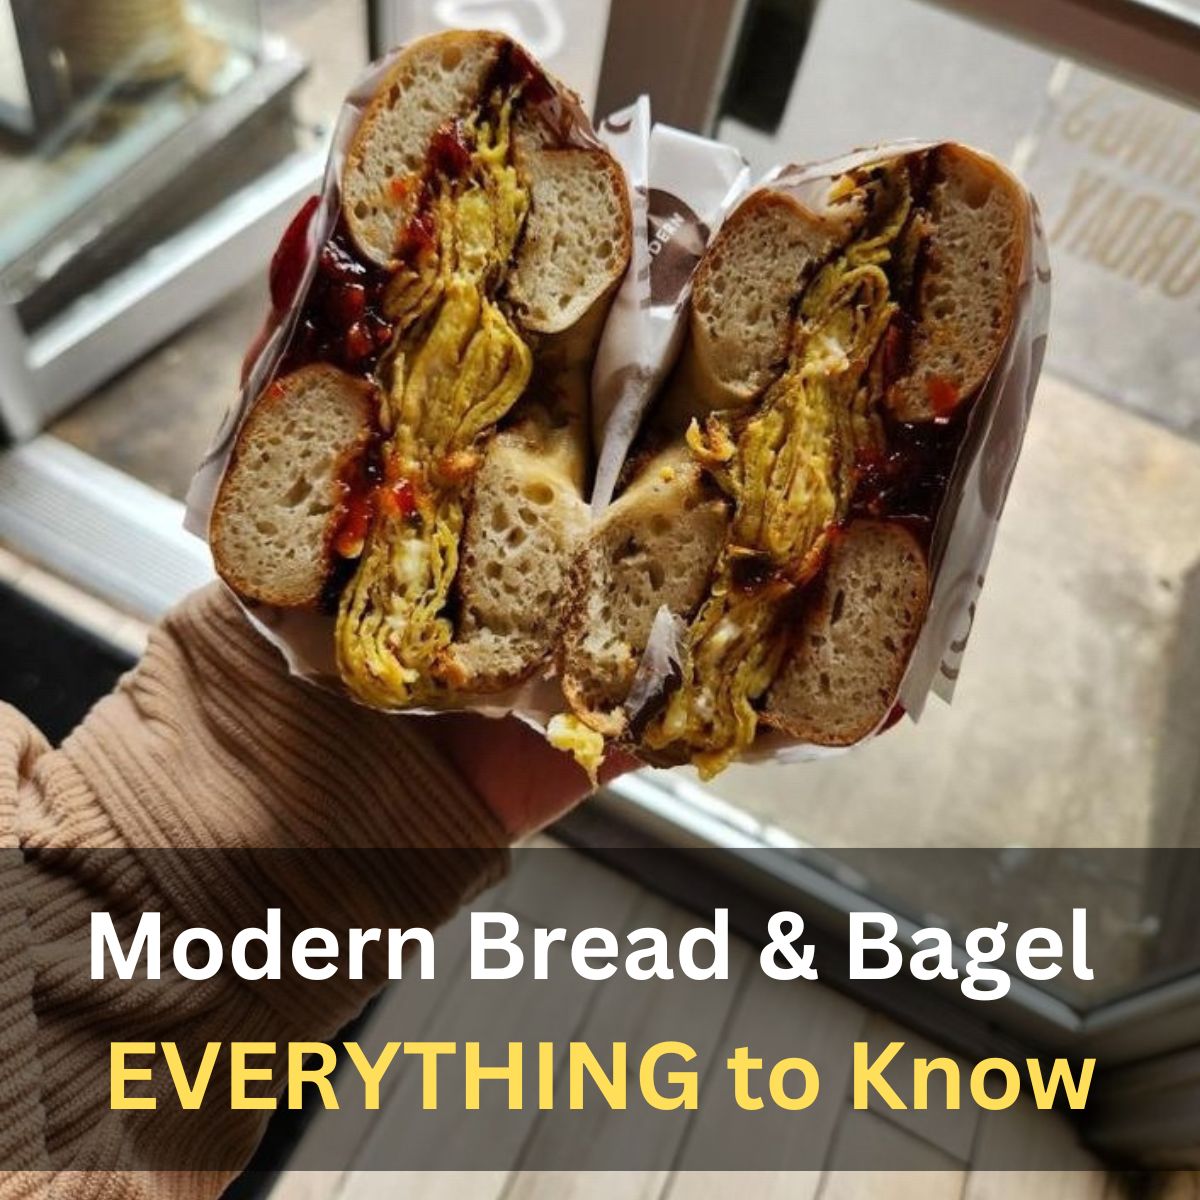 Modern Bread & Bagel FULL Review